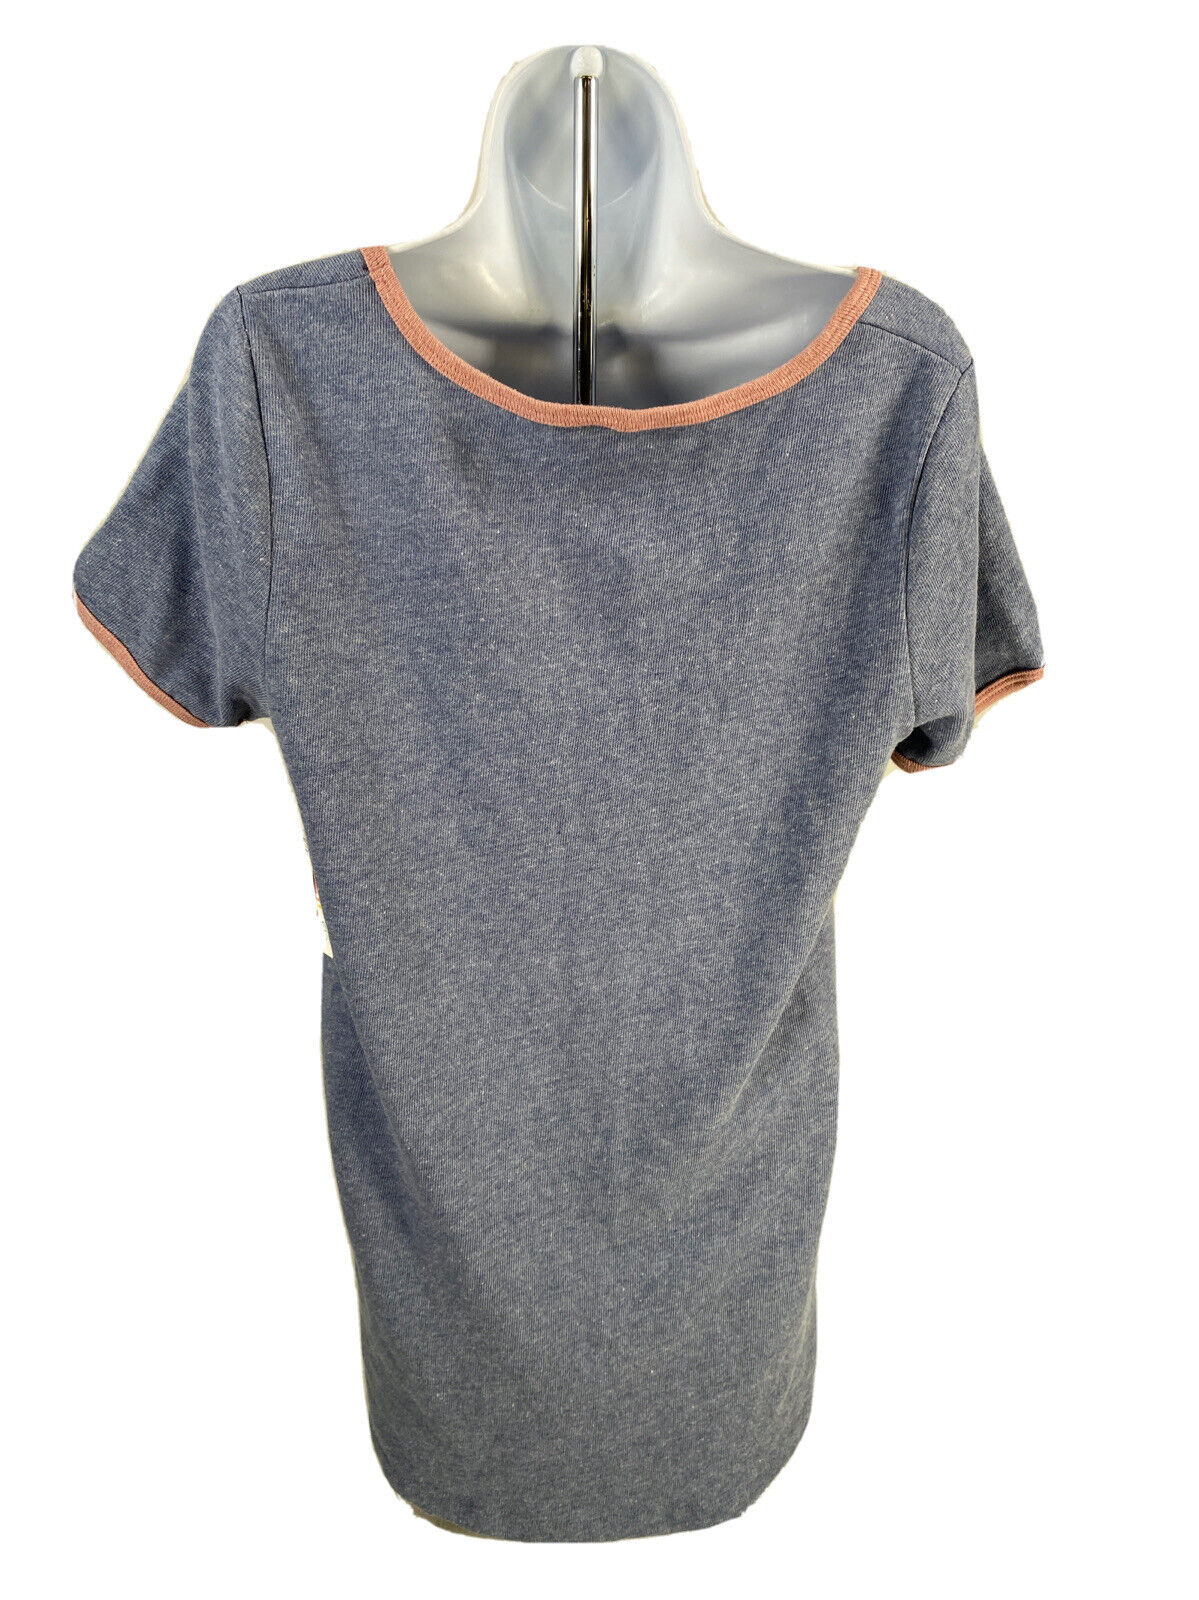 NEW Lularoe Women's Blue Short Sleeve Knit Classic T-Shirt Sz S